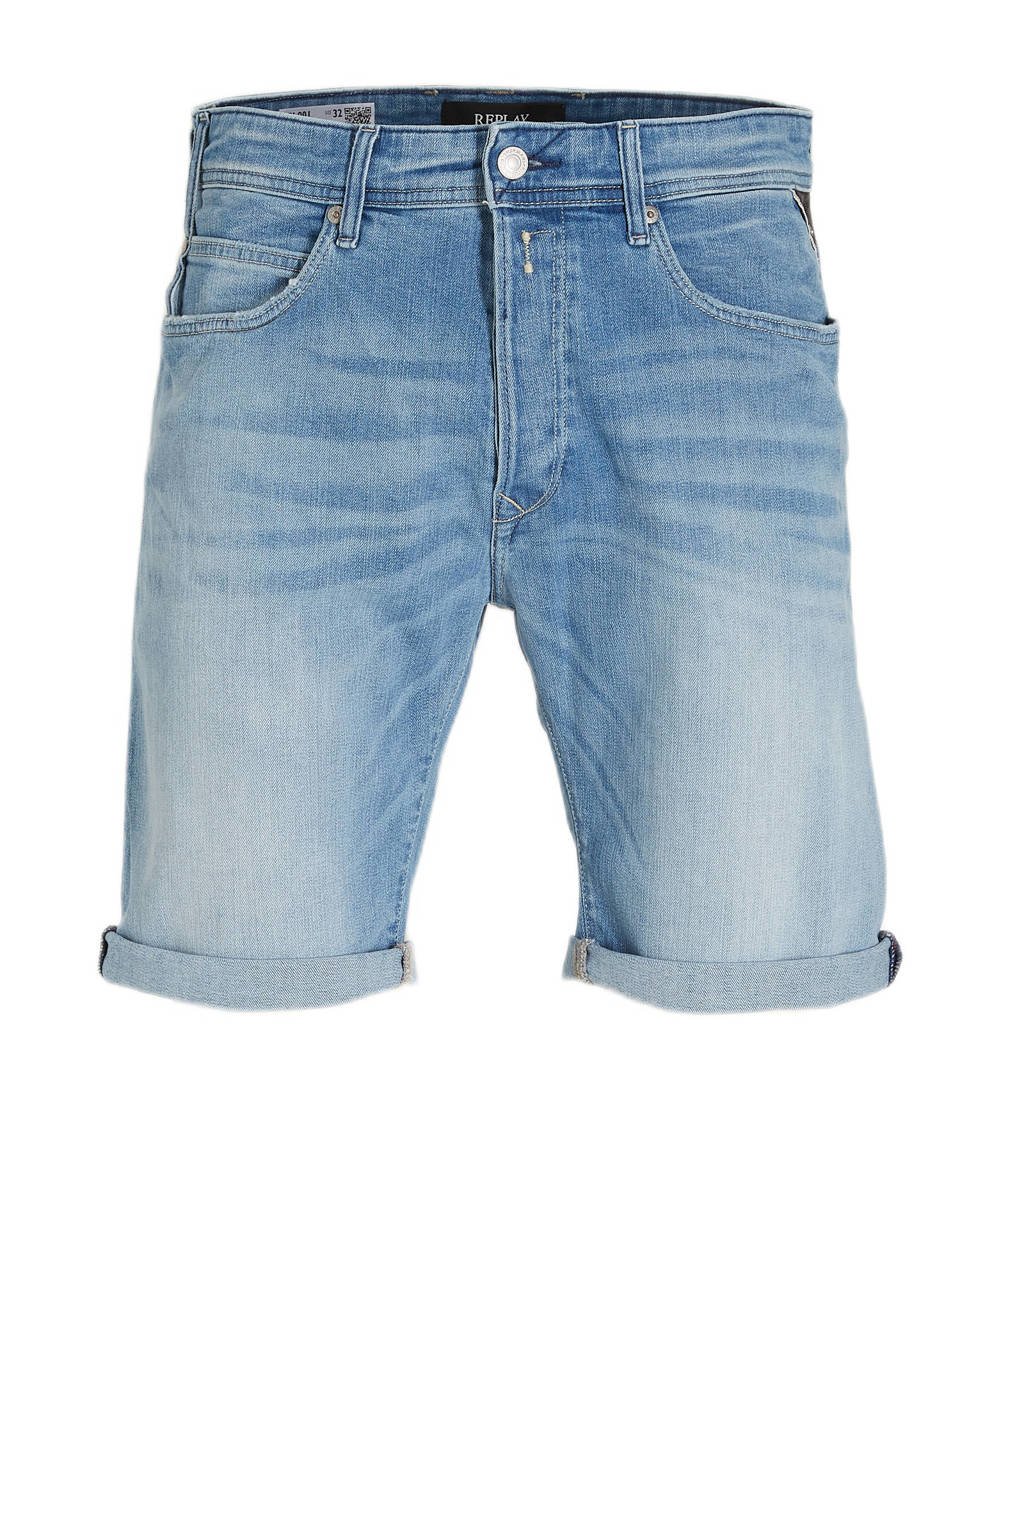 REPLAY regular fit jeans short RBJ.901 light blue